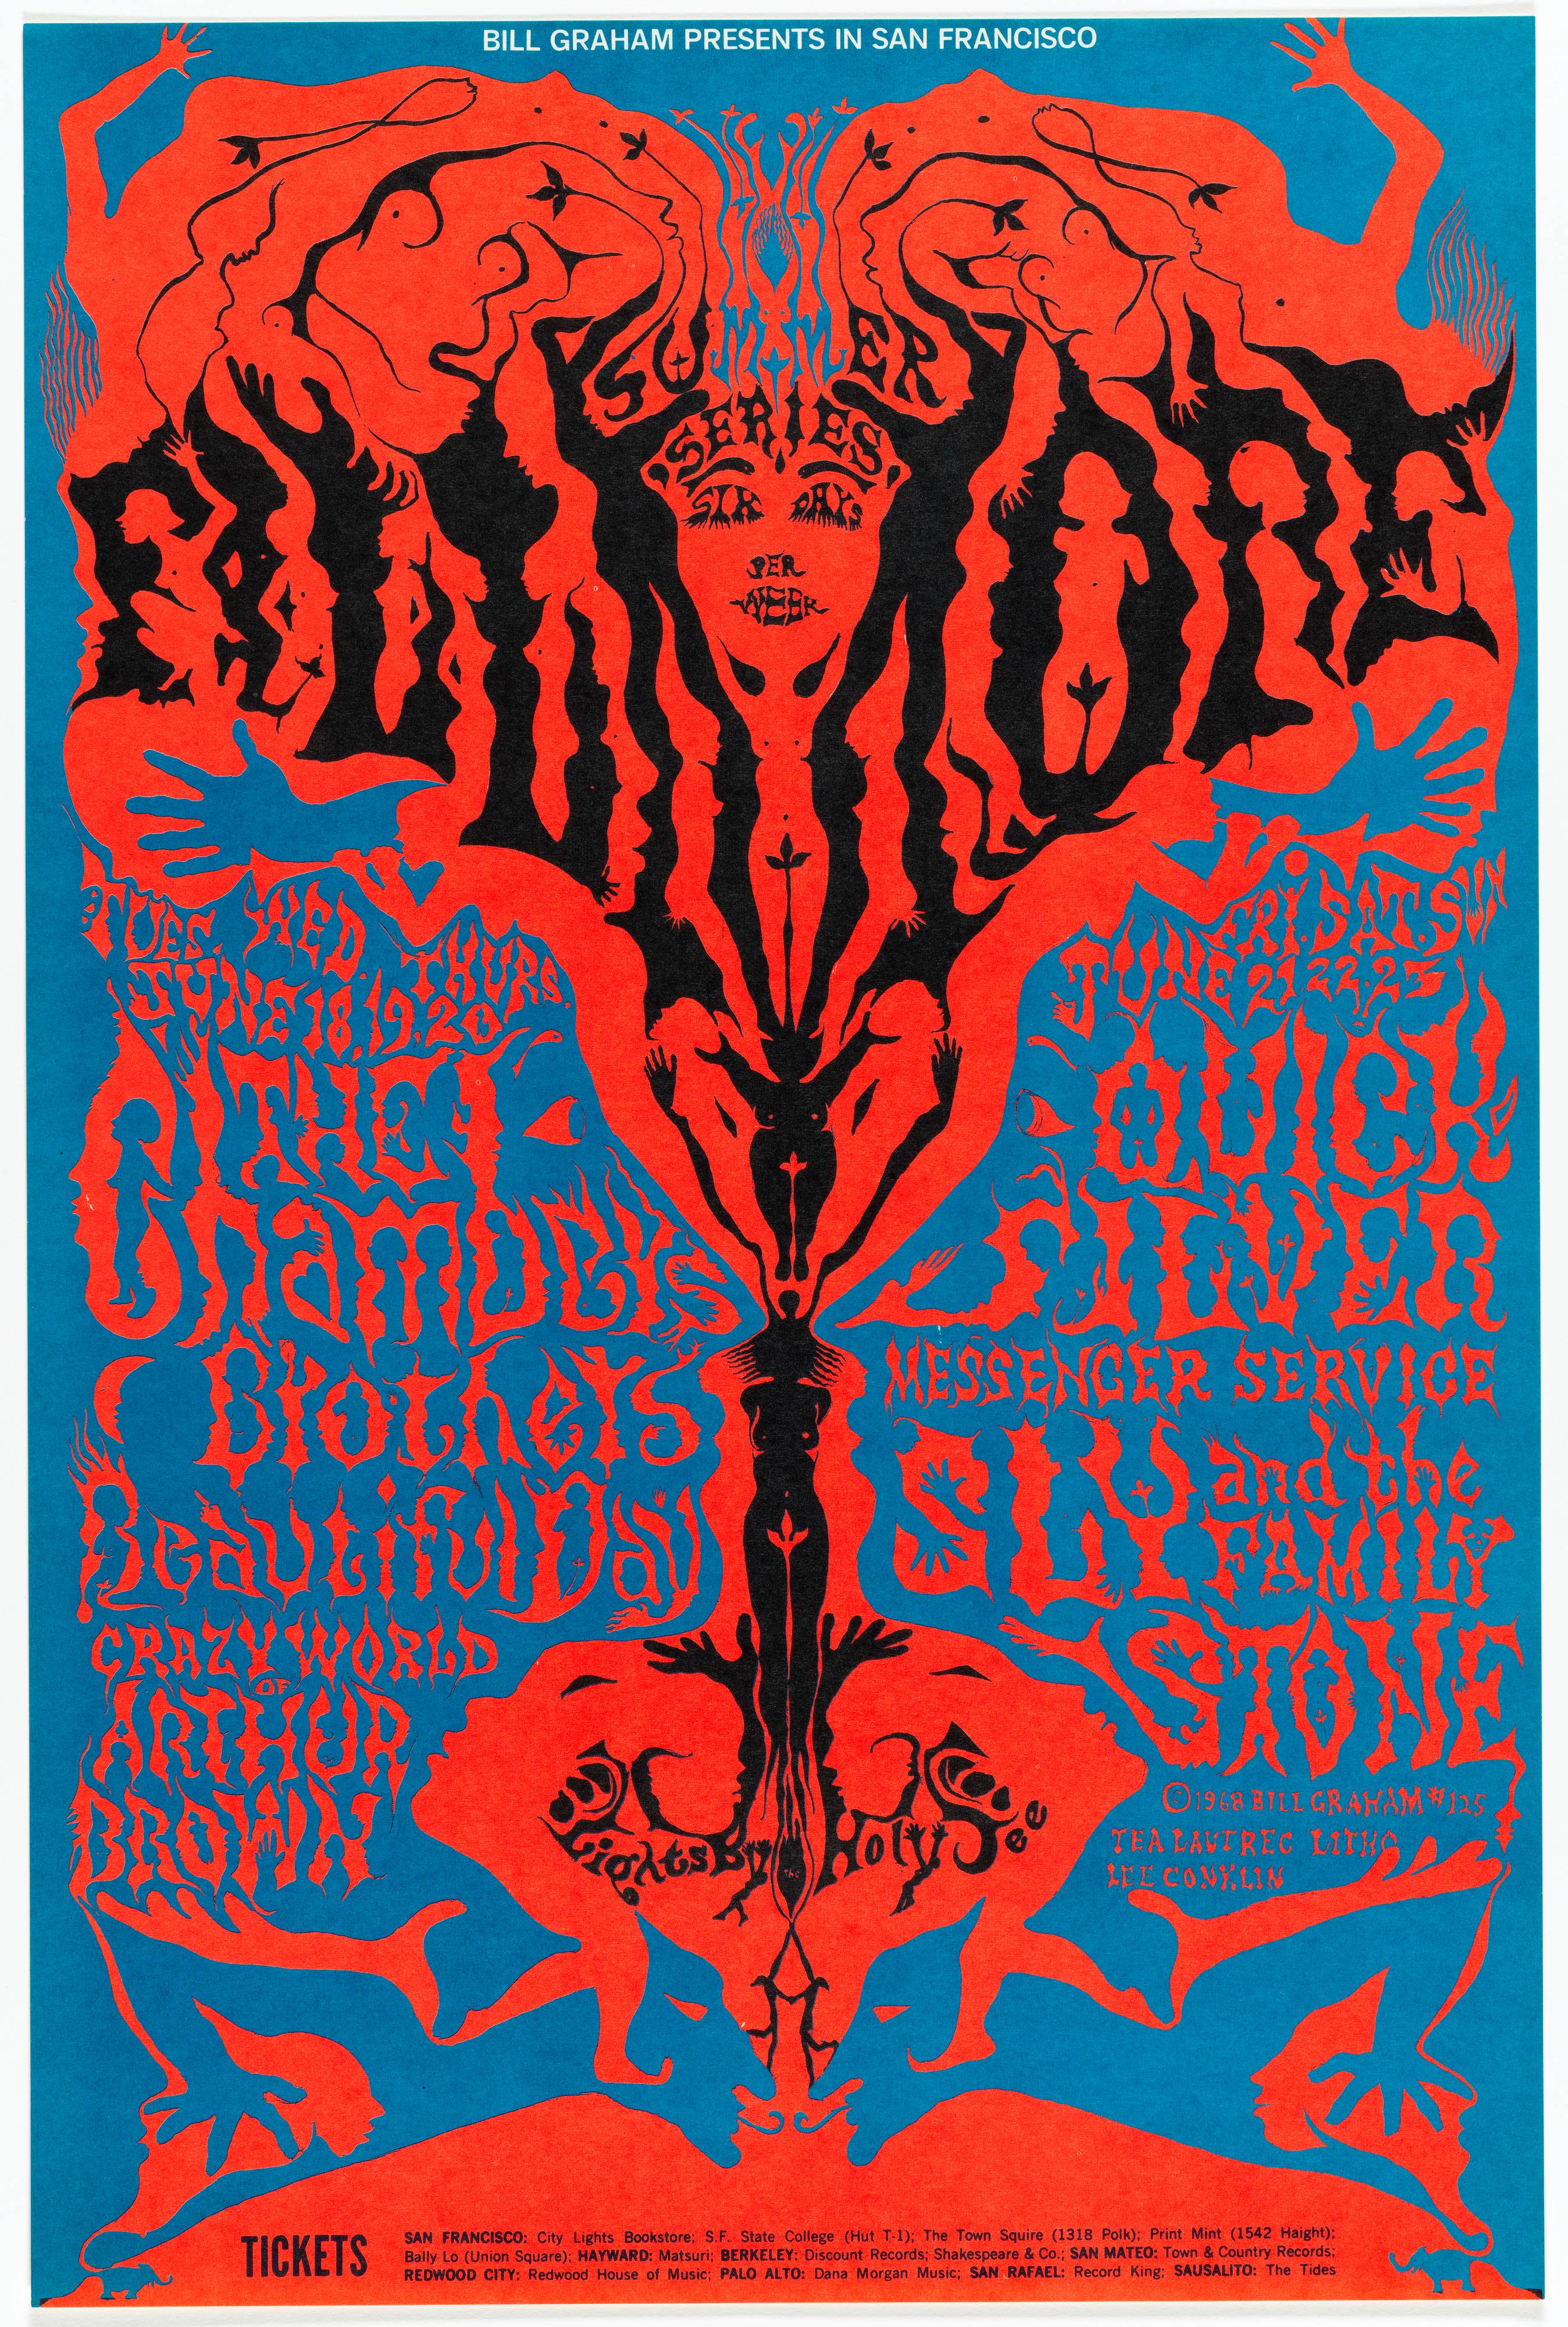 Chambers Brothers, Quicksilver Messenger Service; Fillmore Auditorium, June 18-23, 1968